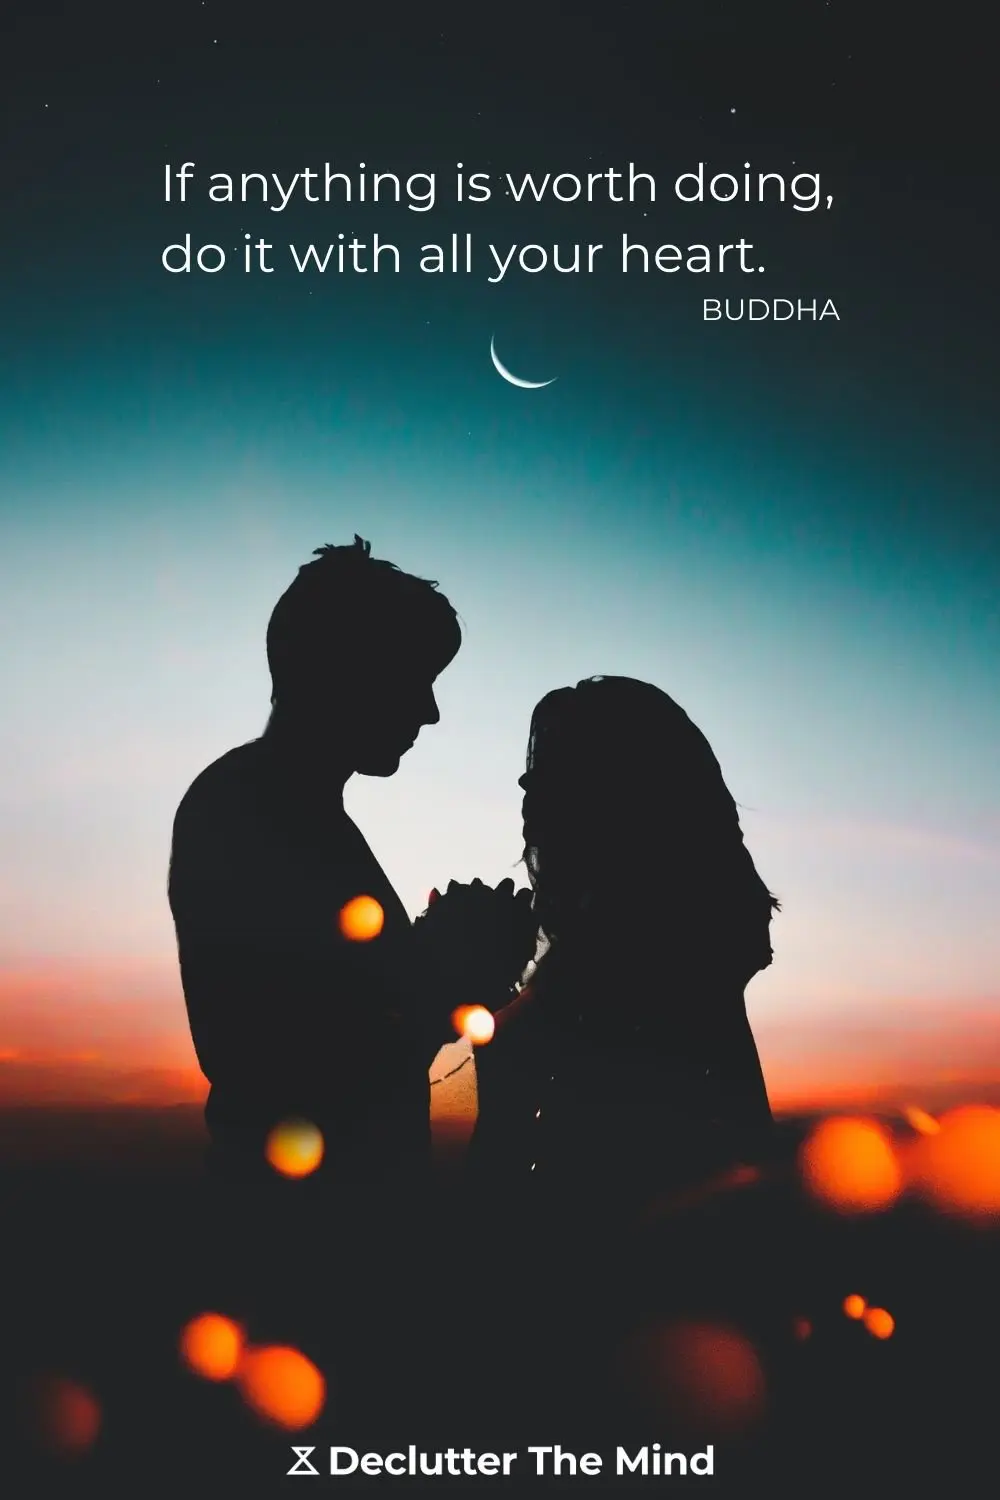 buddha quotes on love